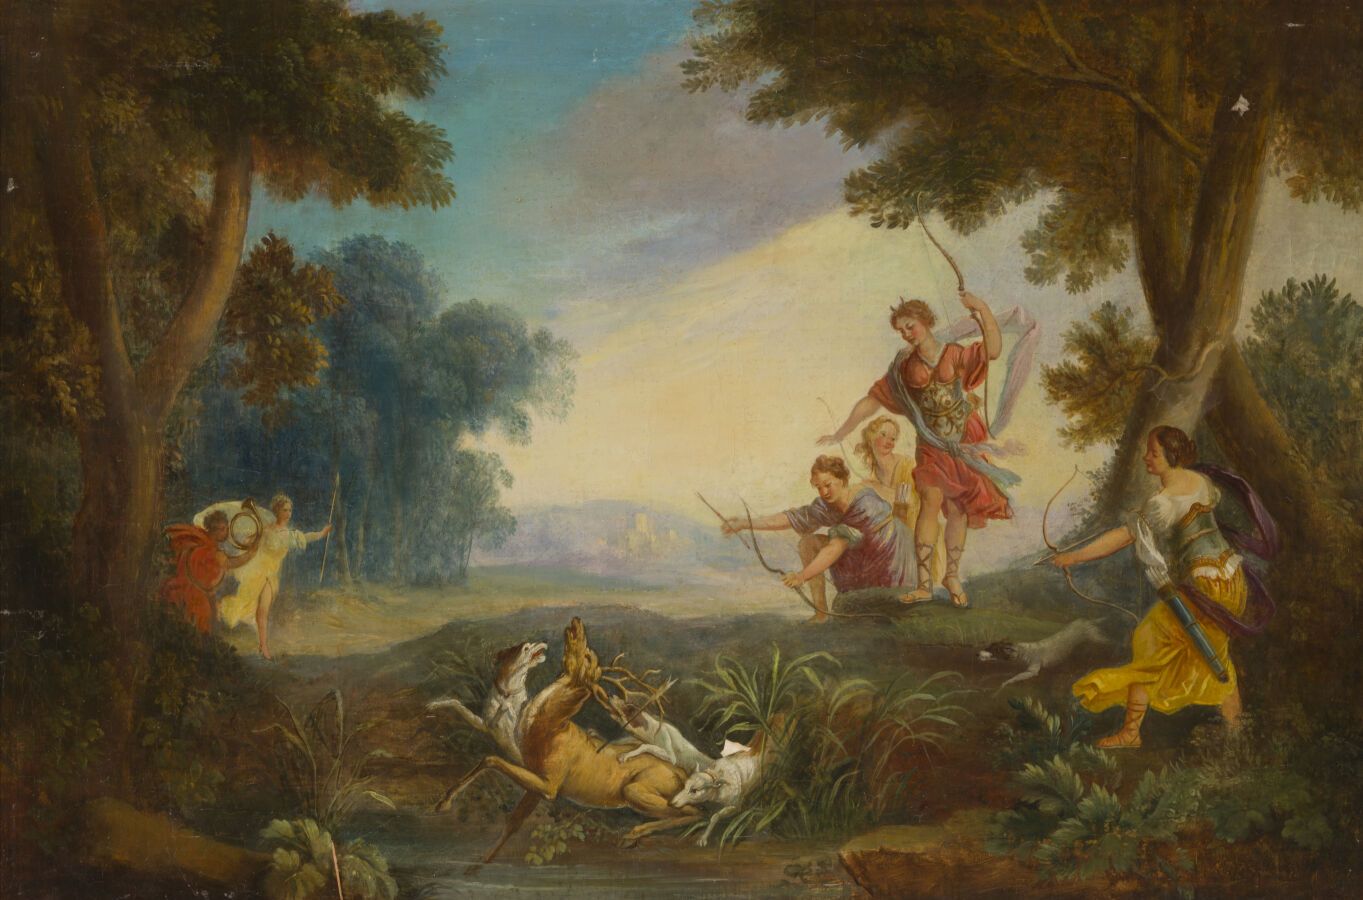 Null 北方学校在18世纪的品味

戴安娜和阿克泰恩

原有画布上的油画

63 x 95 cm

(稍有意外)

18世纪初